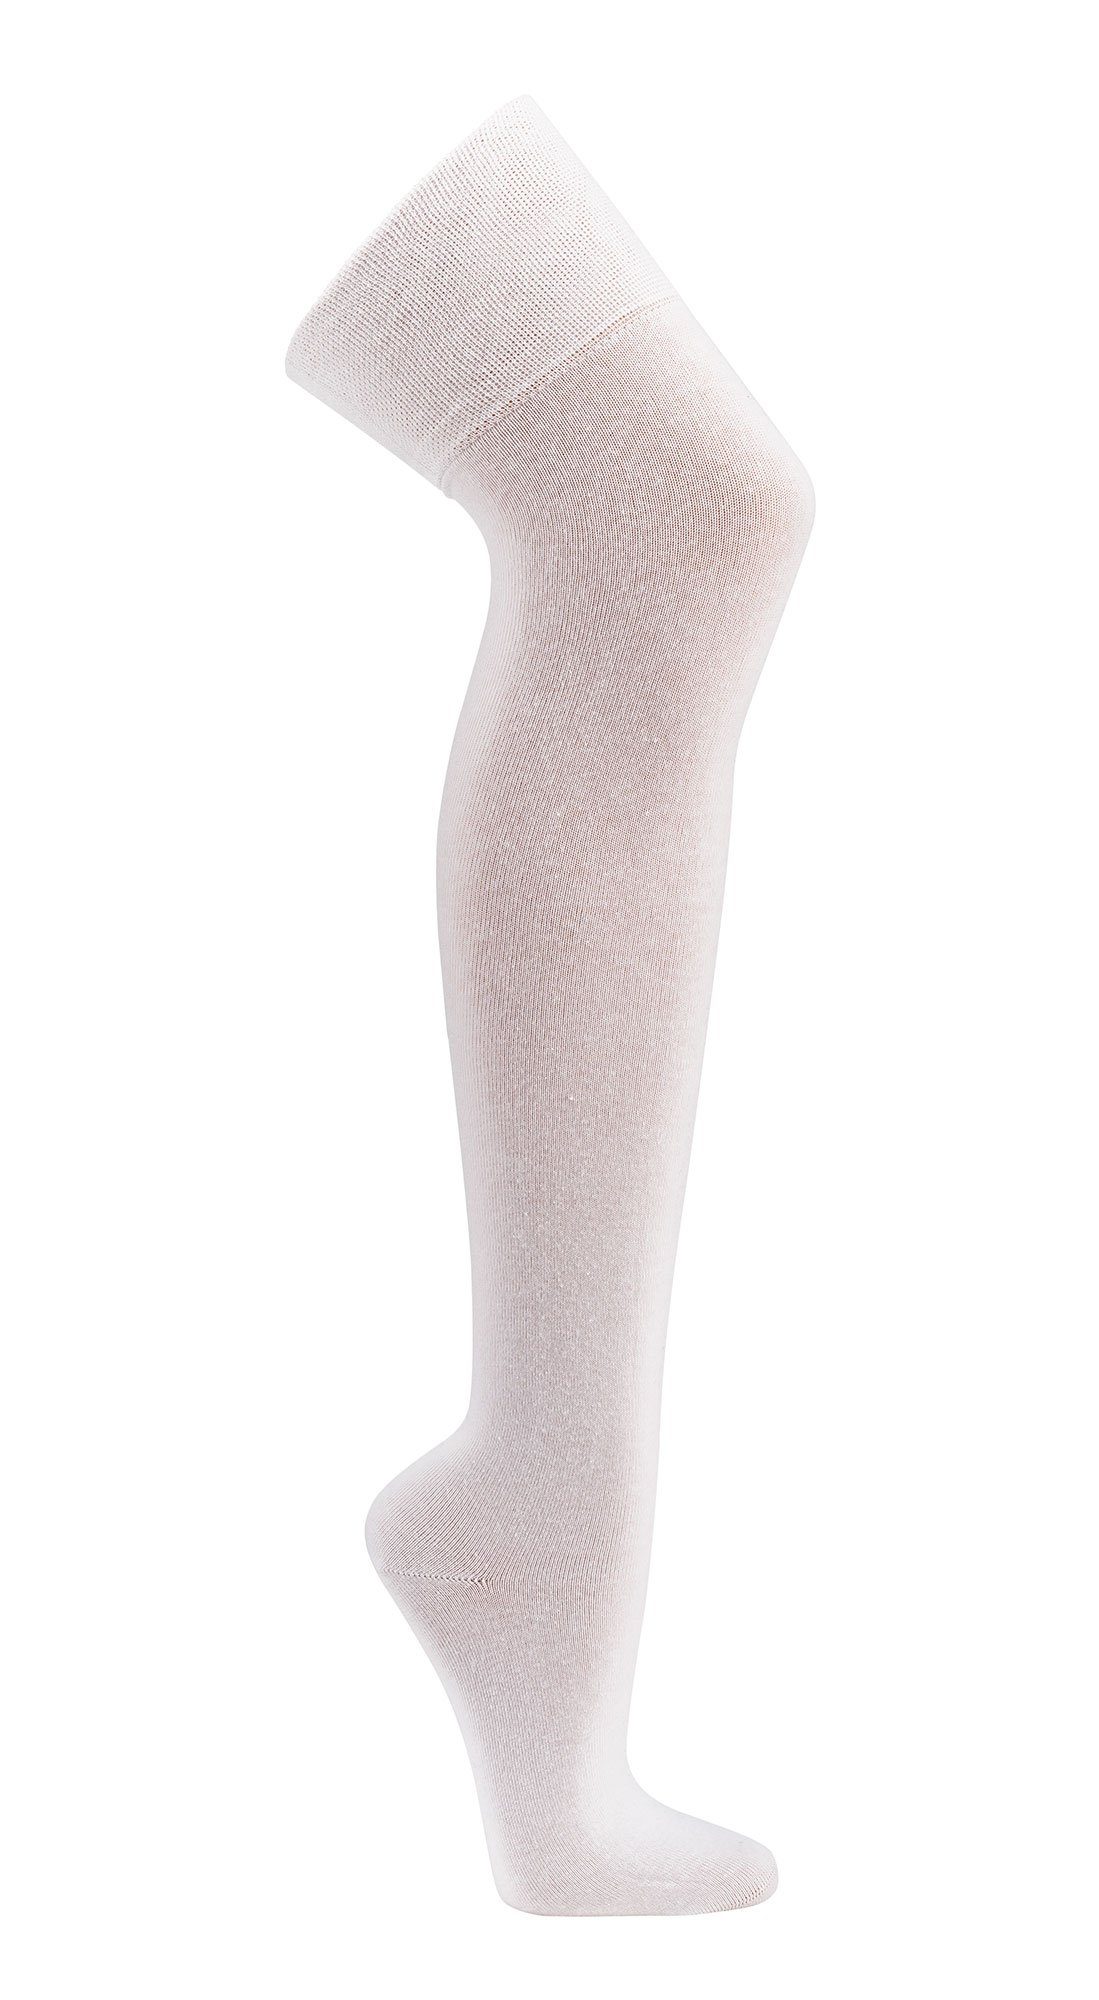 Socks Damen schwarz weiß Teenager Paar) Kawaii (1 4 Strümpfe Overknee Overknees oder Overknees Fun in Wowerat